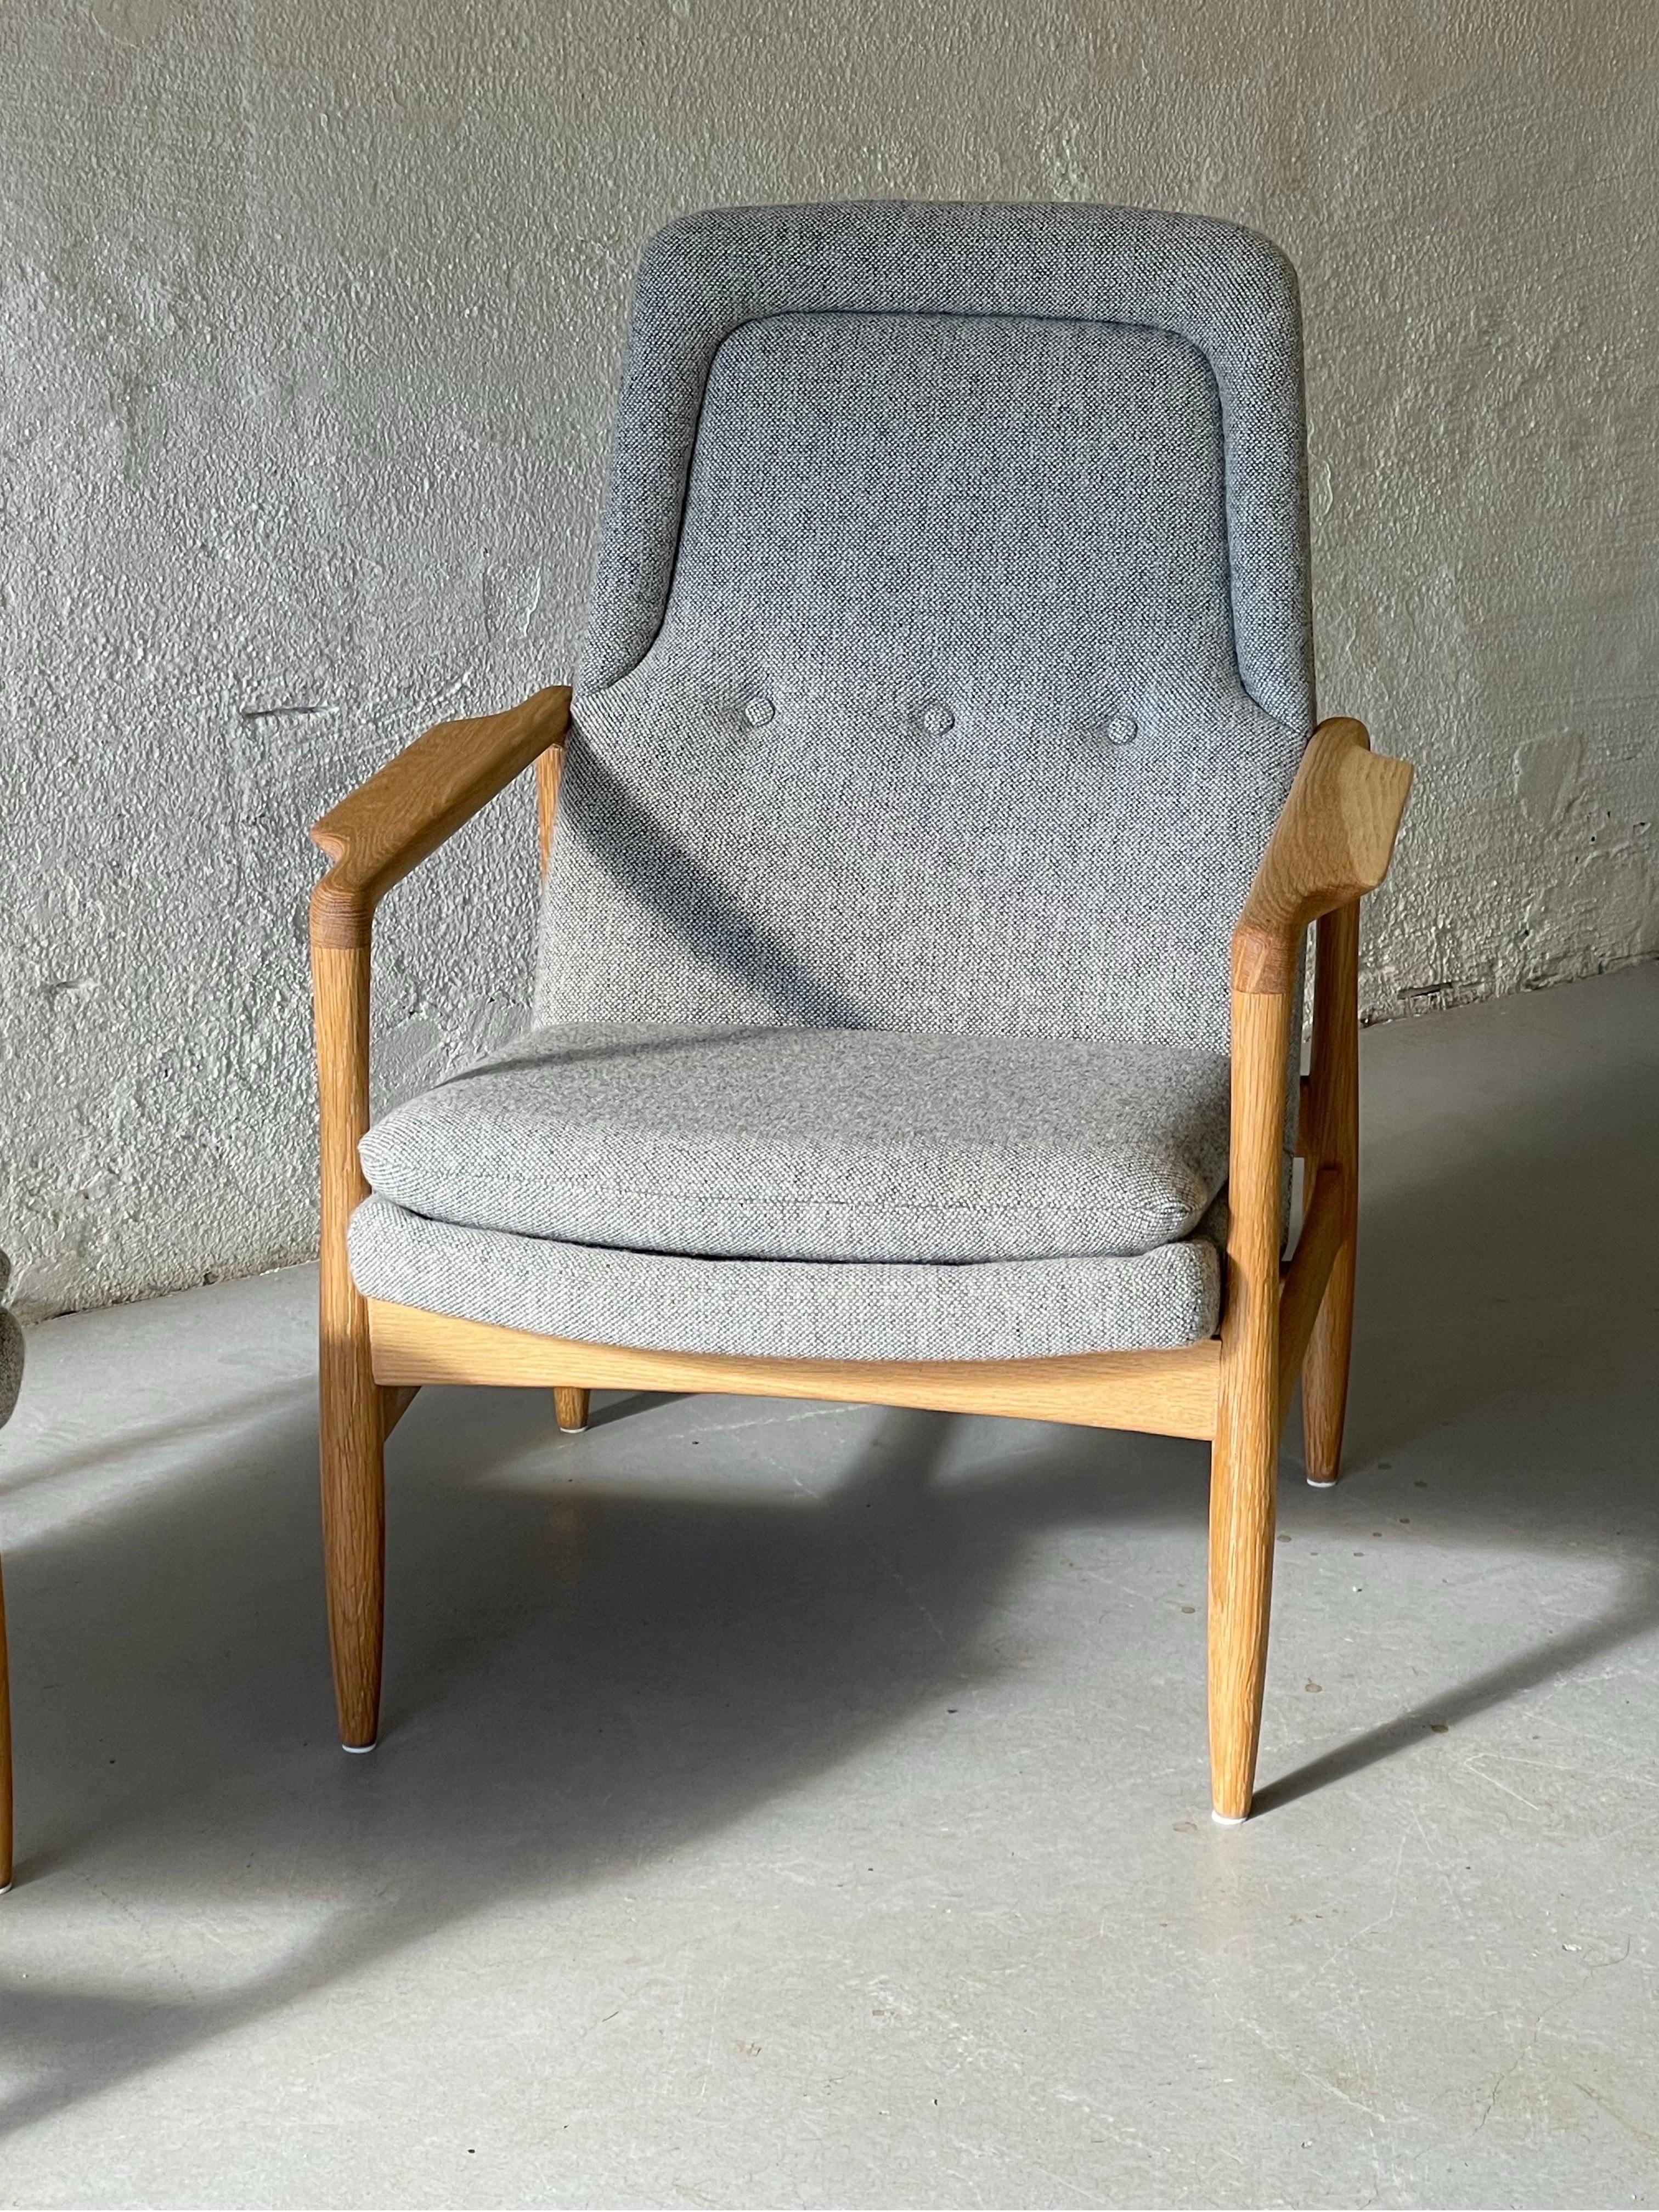 Norwegian Midcentury - Modern chairs, Torbjørn Afdal, 1957 For Sale 1